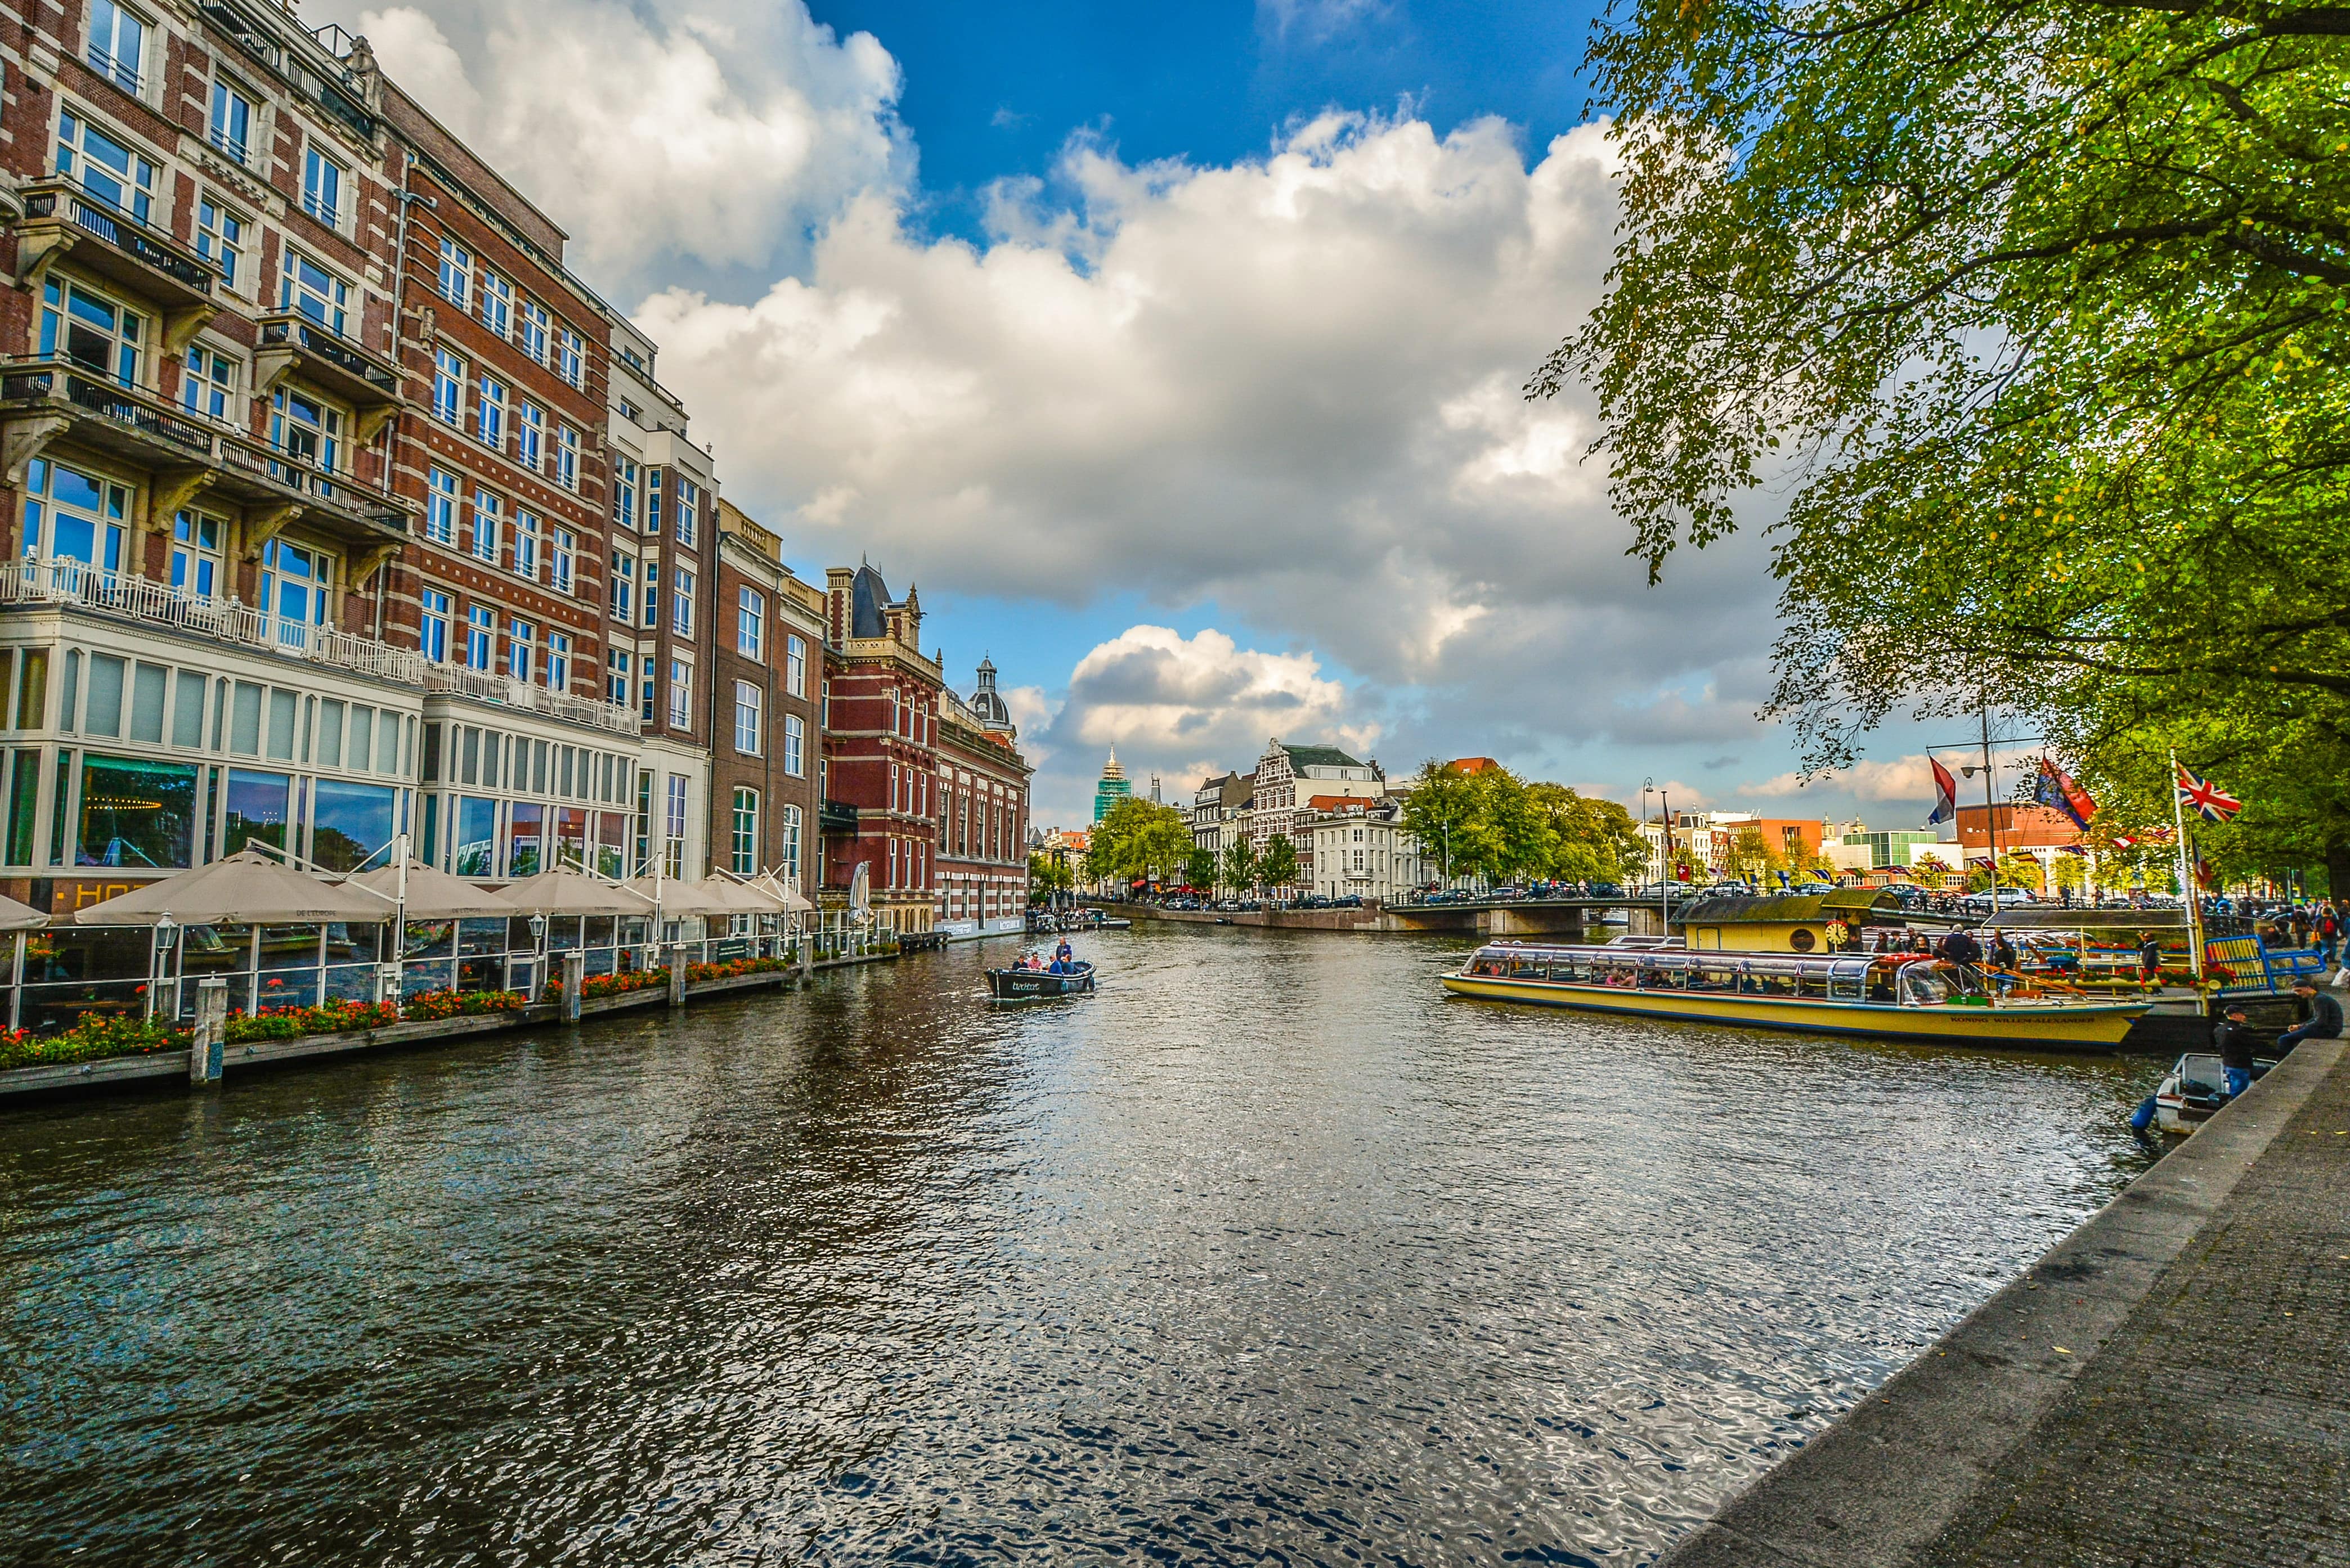 Enjoy bike rides and pub crawls on your Amsterdam city break